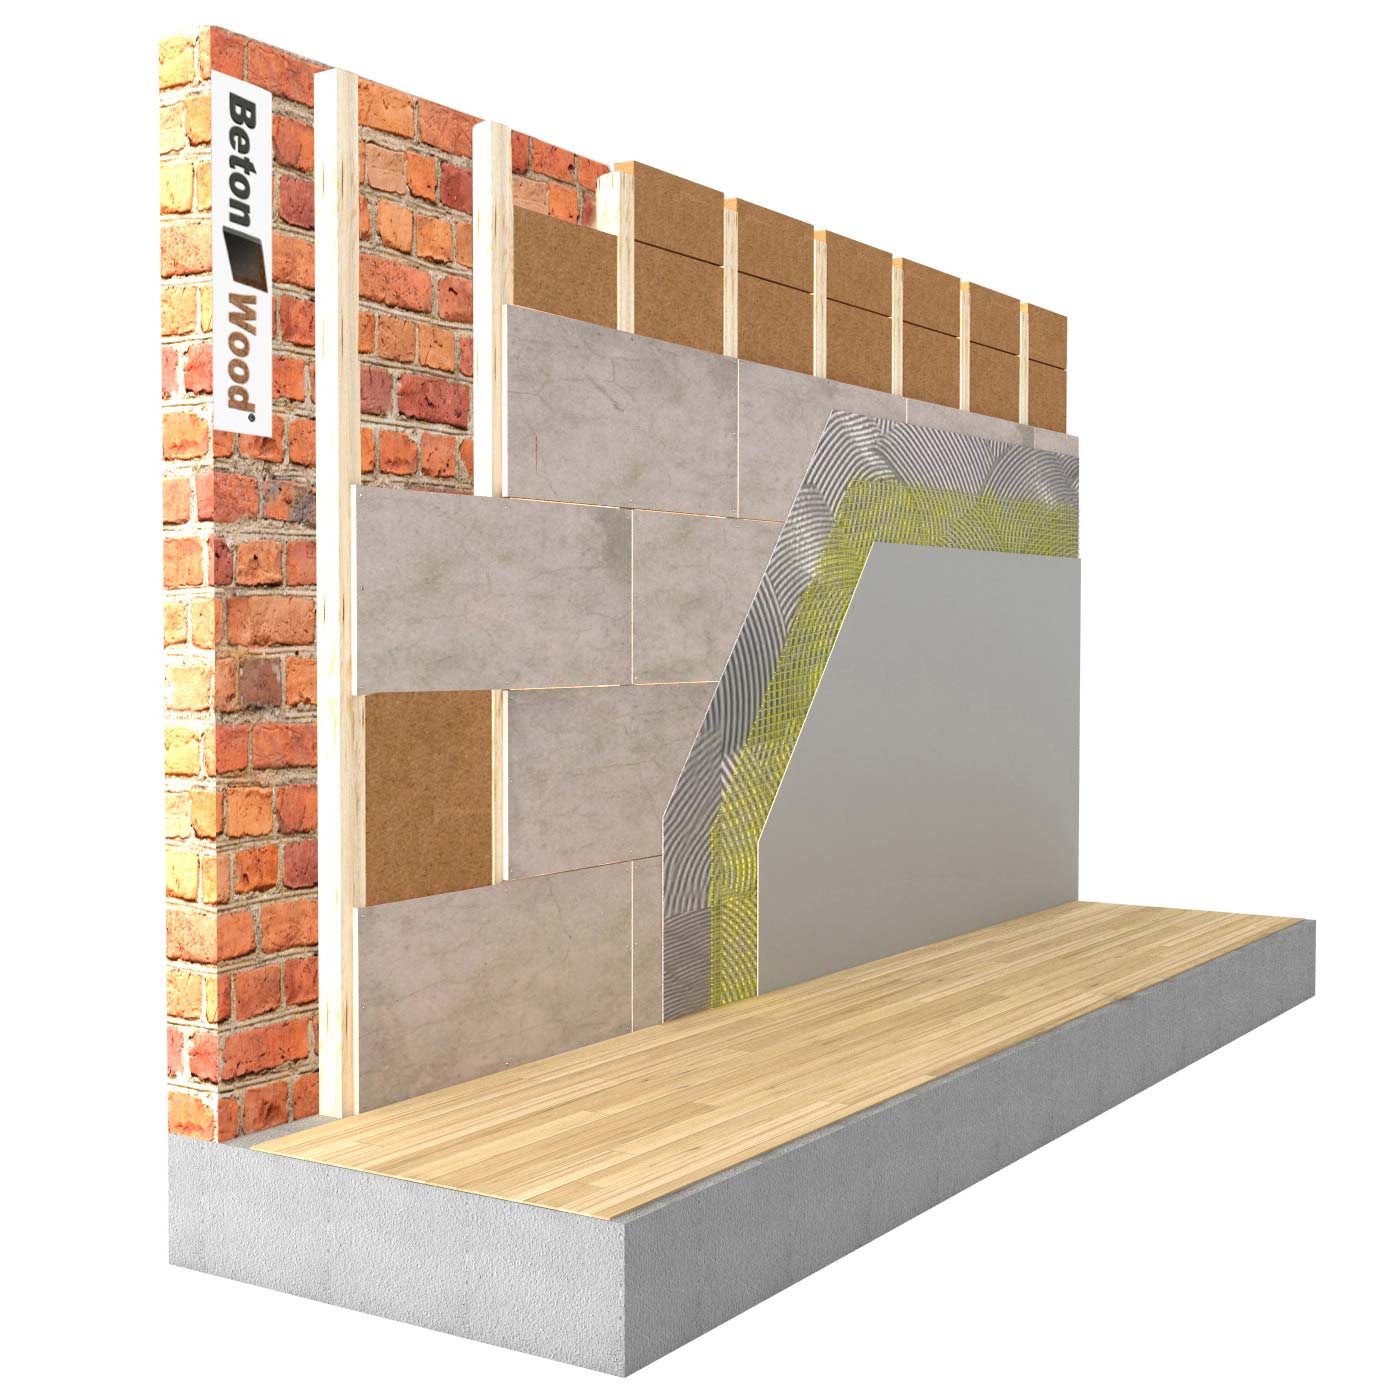 Counterwall insulation in flexible fiber wood Flex on masonry